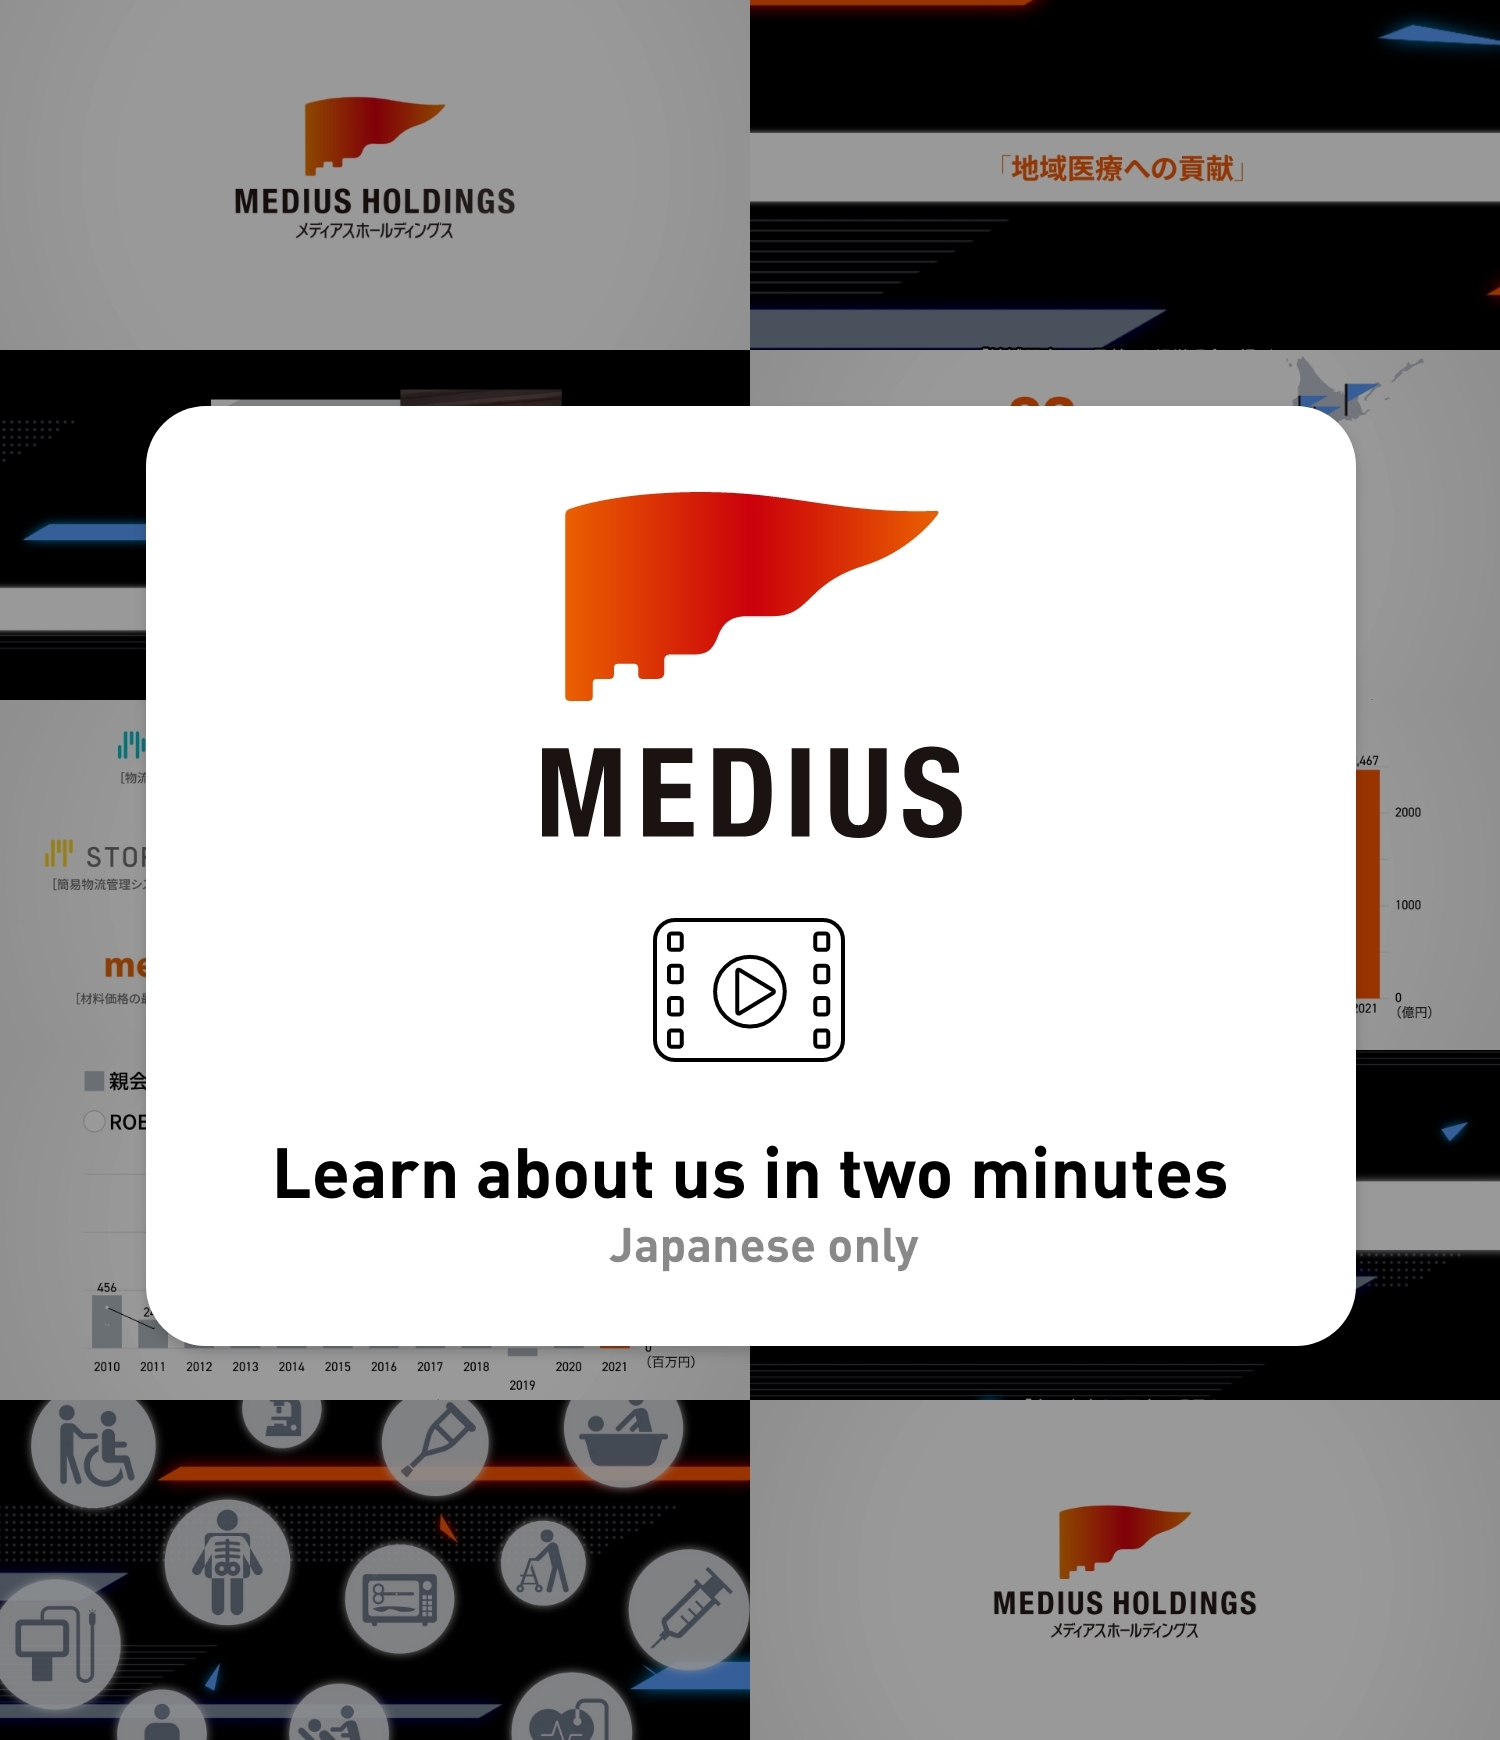 Medius Holdings 2 minutes tips